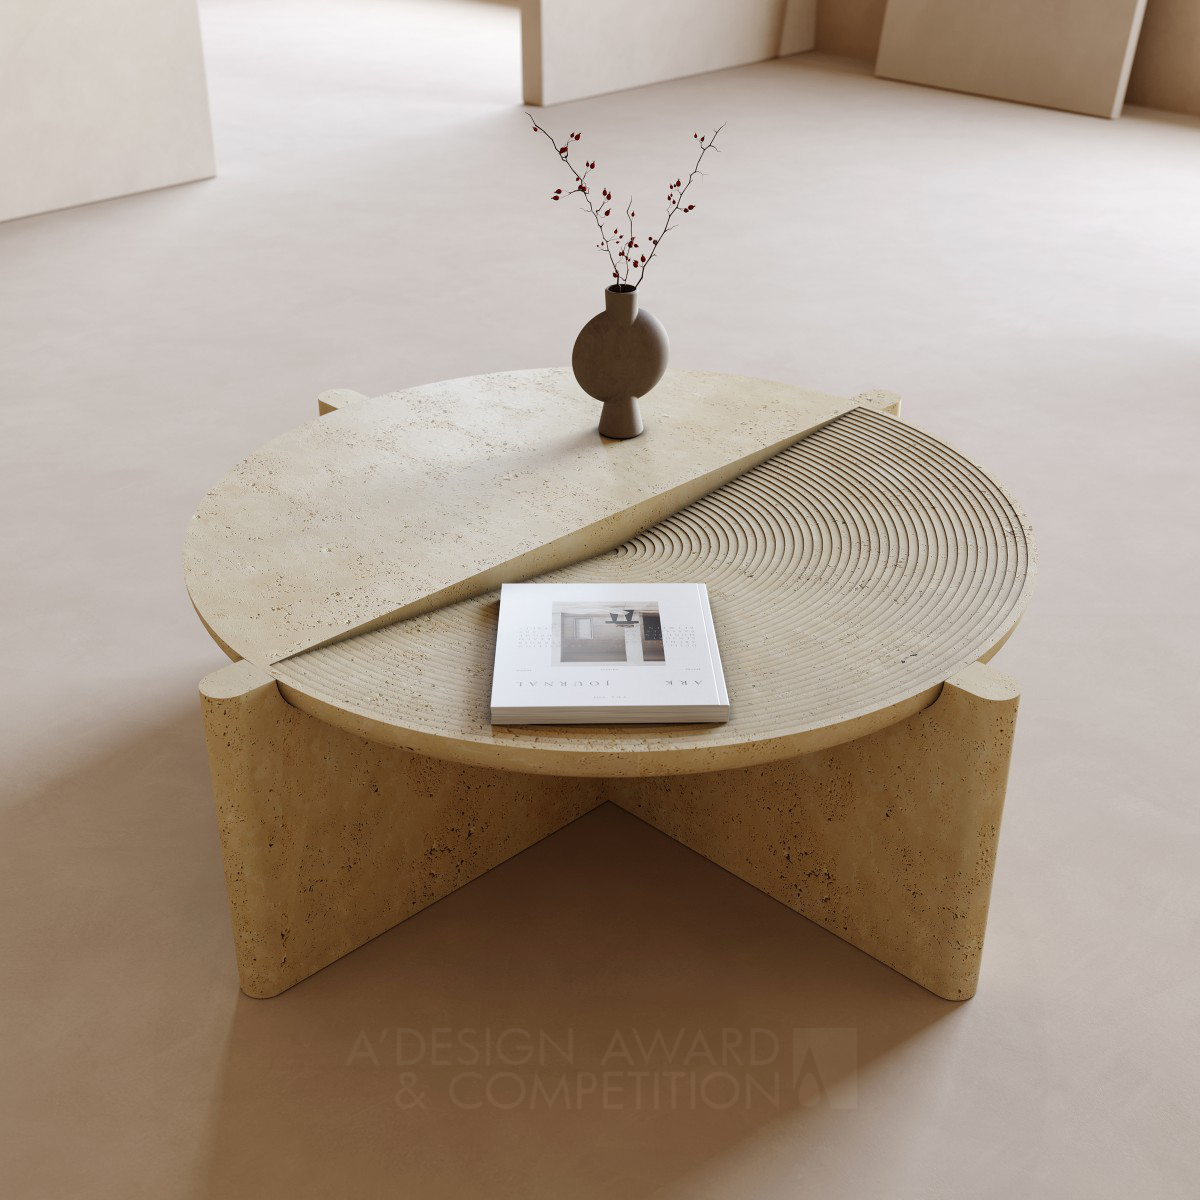 Fulden Topaloglu wins Silver at the prestigious A' Furniture Design Award with Arkhe Furniture Collection.